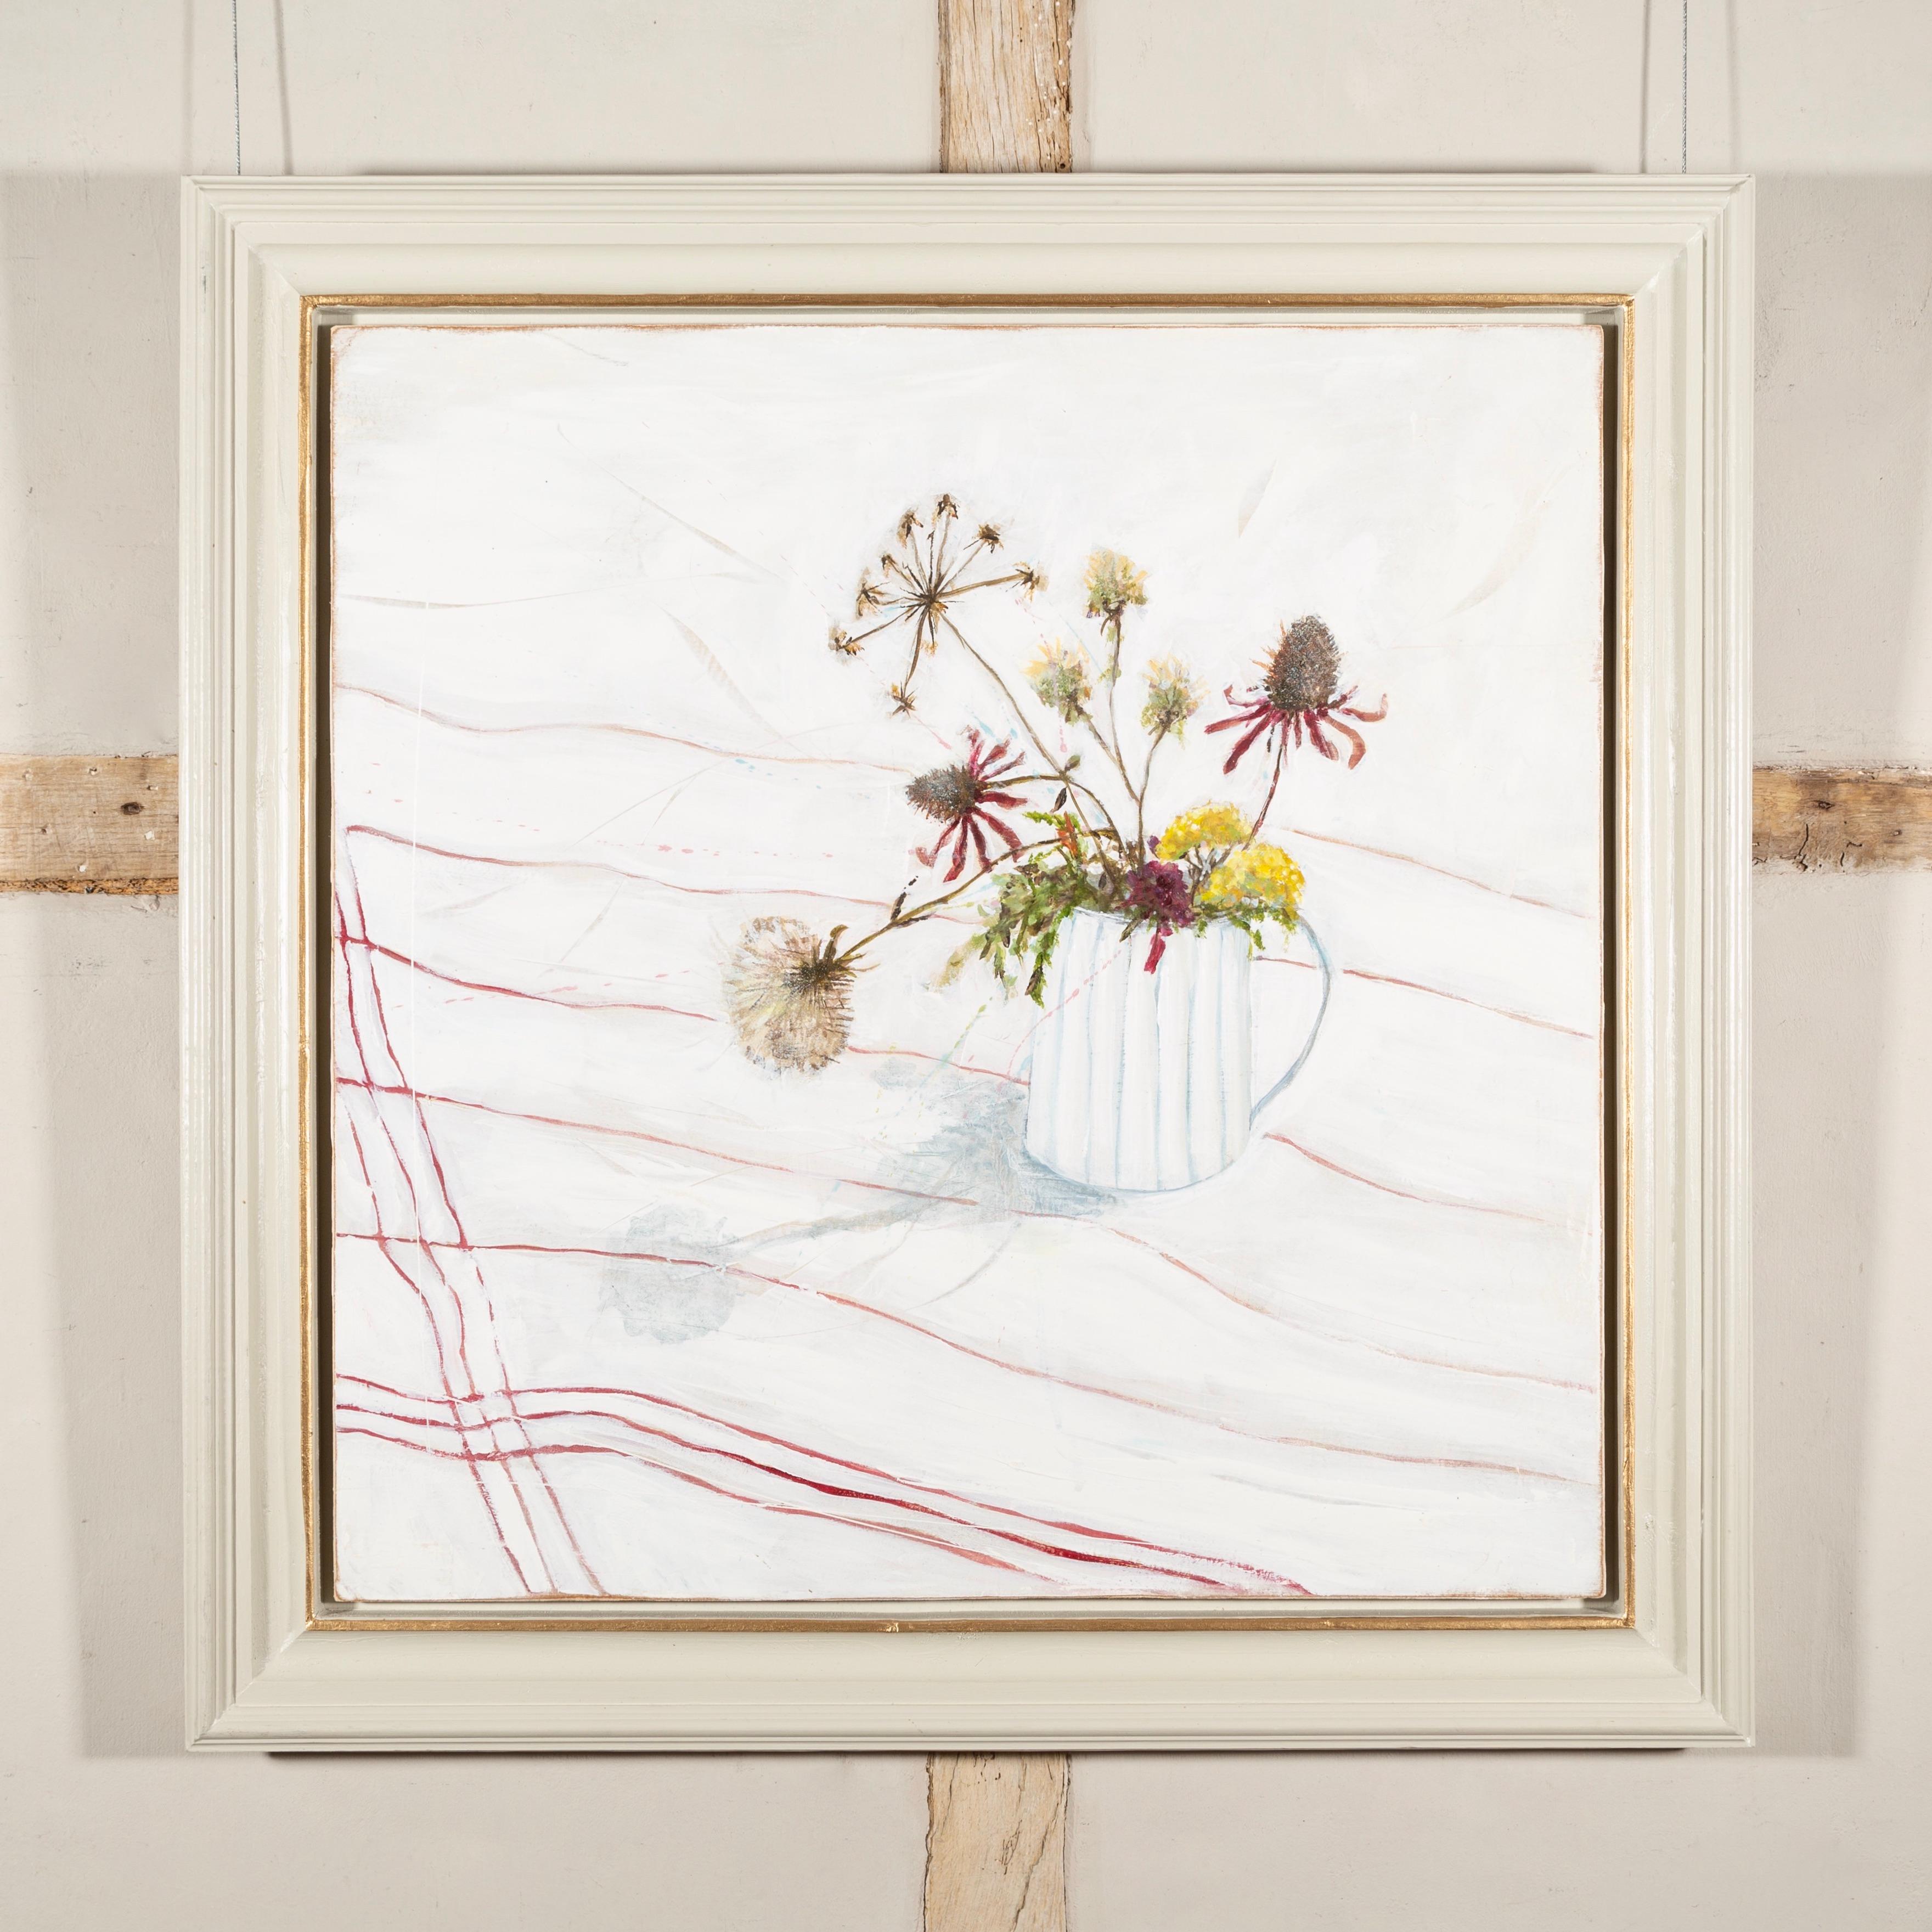 Sticks and Stems, Jane Skingley, still life oil painting flower 2021 For Sale 1